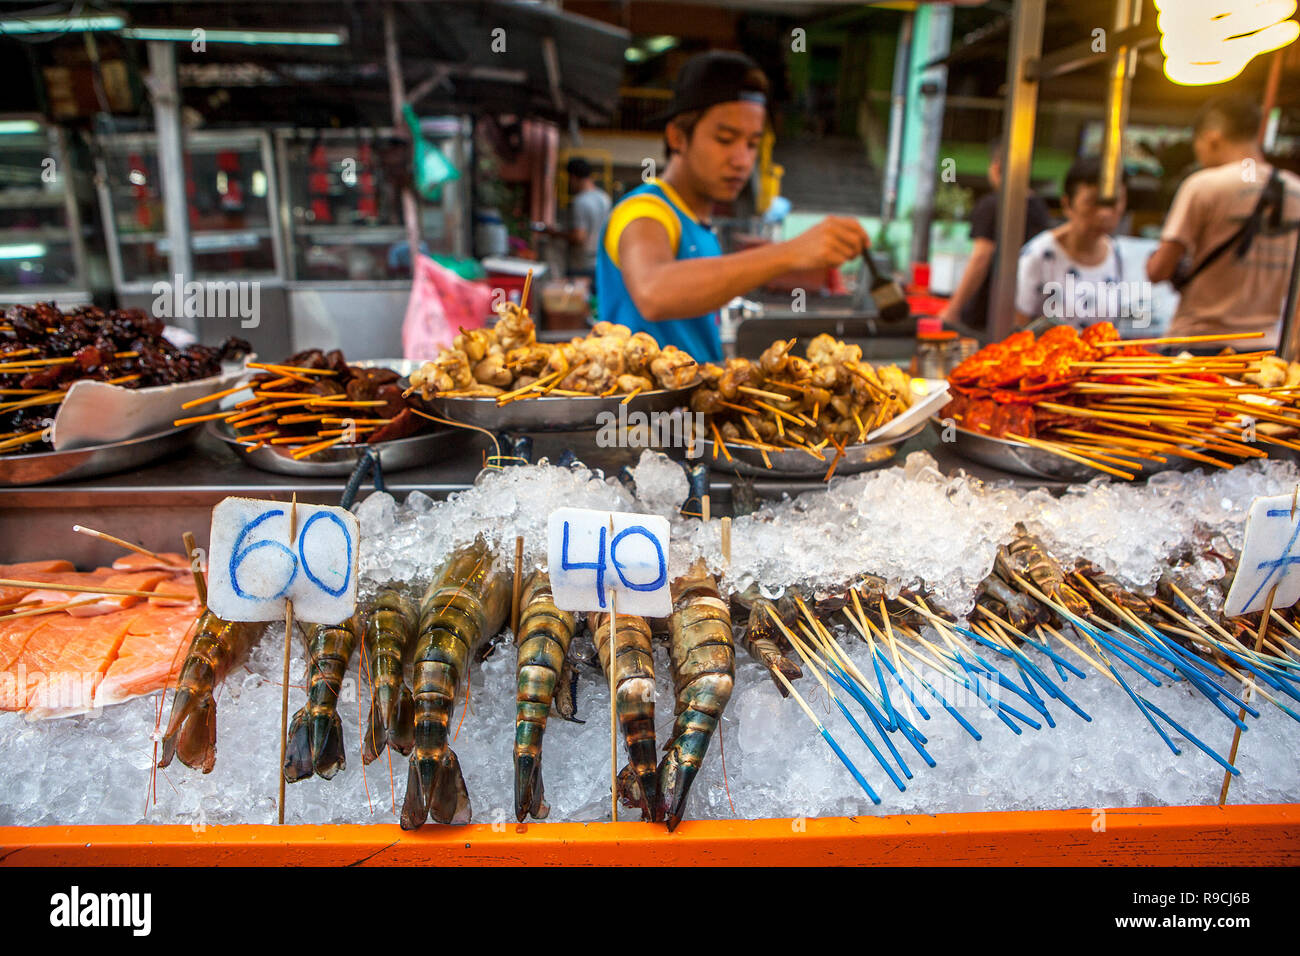 Vendor selling seafood bbq kabobs skewered shrimp on Jalan Alor, Bukit Bintang, Kuala Lumpur, Malaysia. Stock Photo